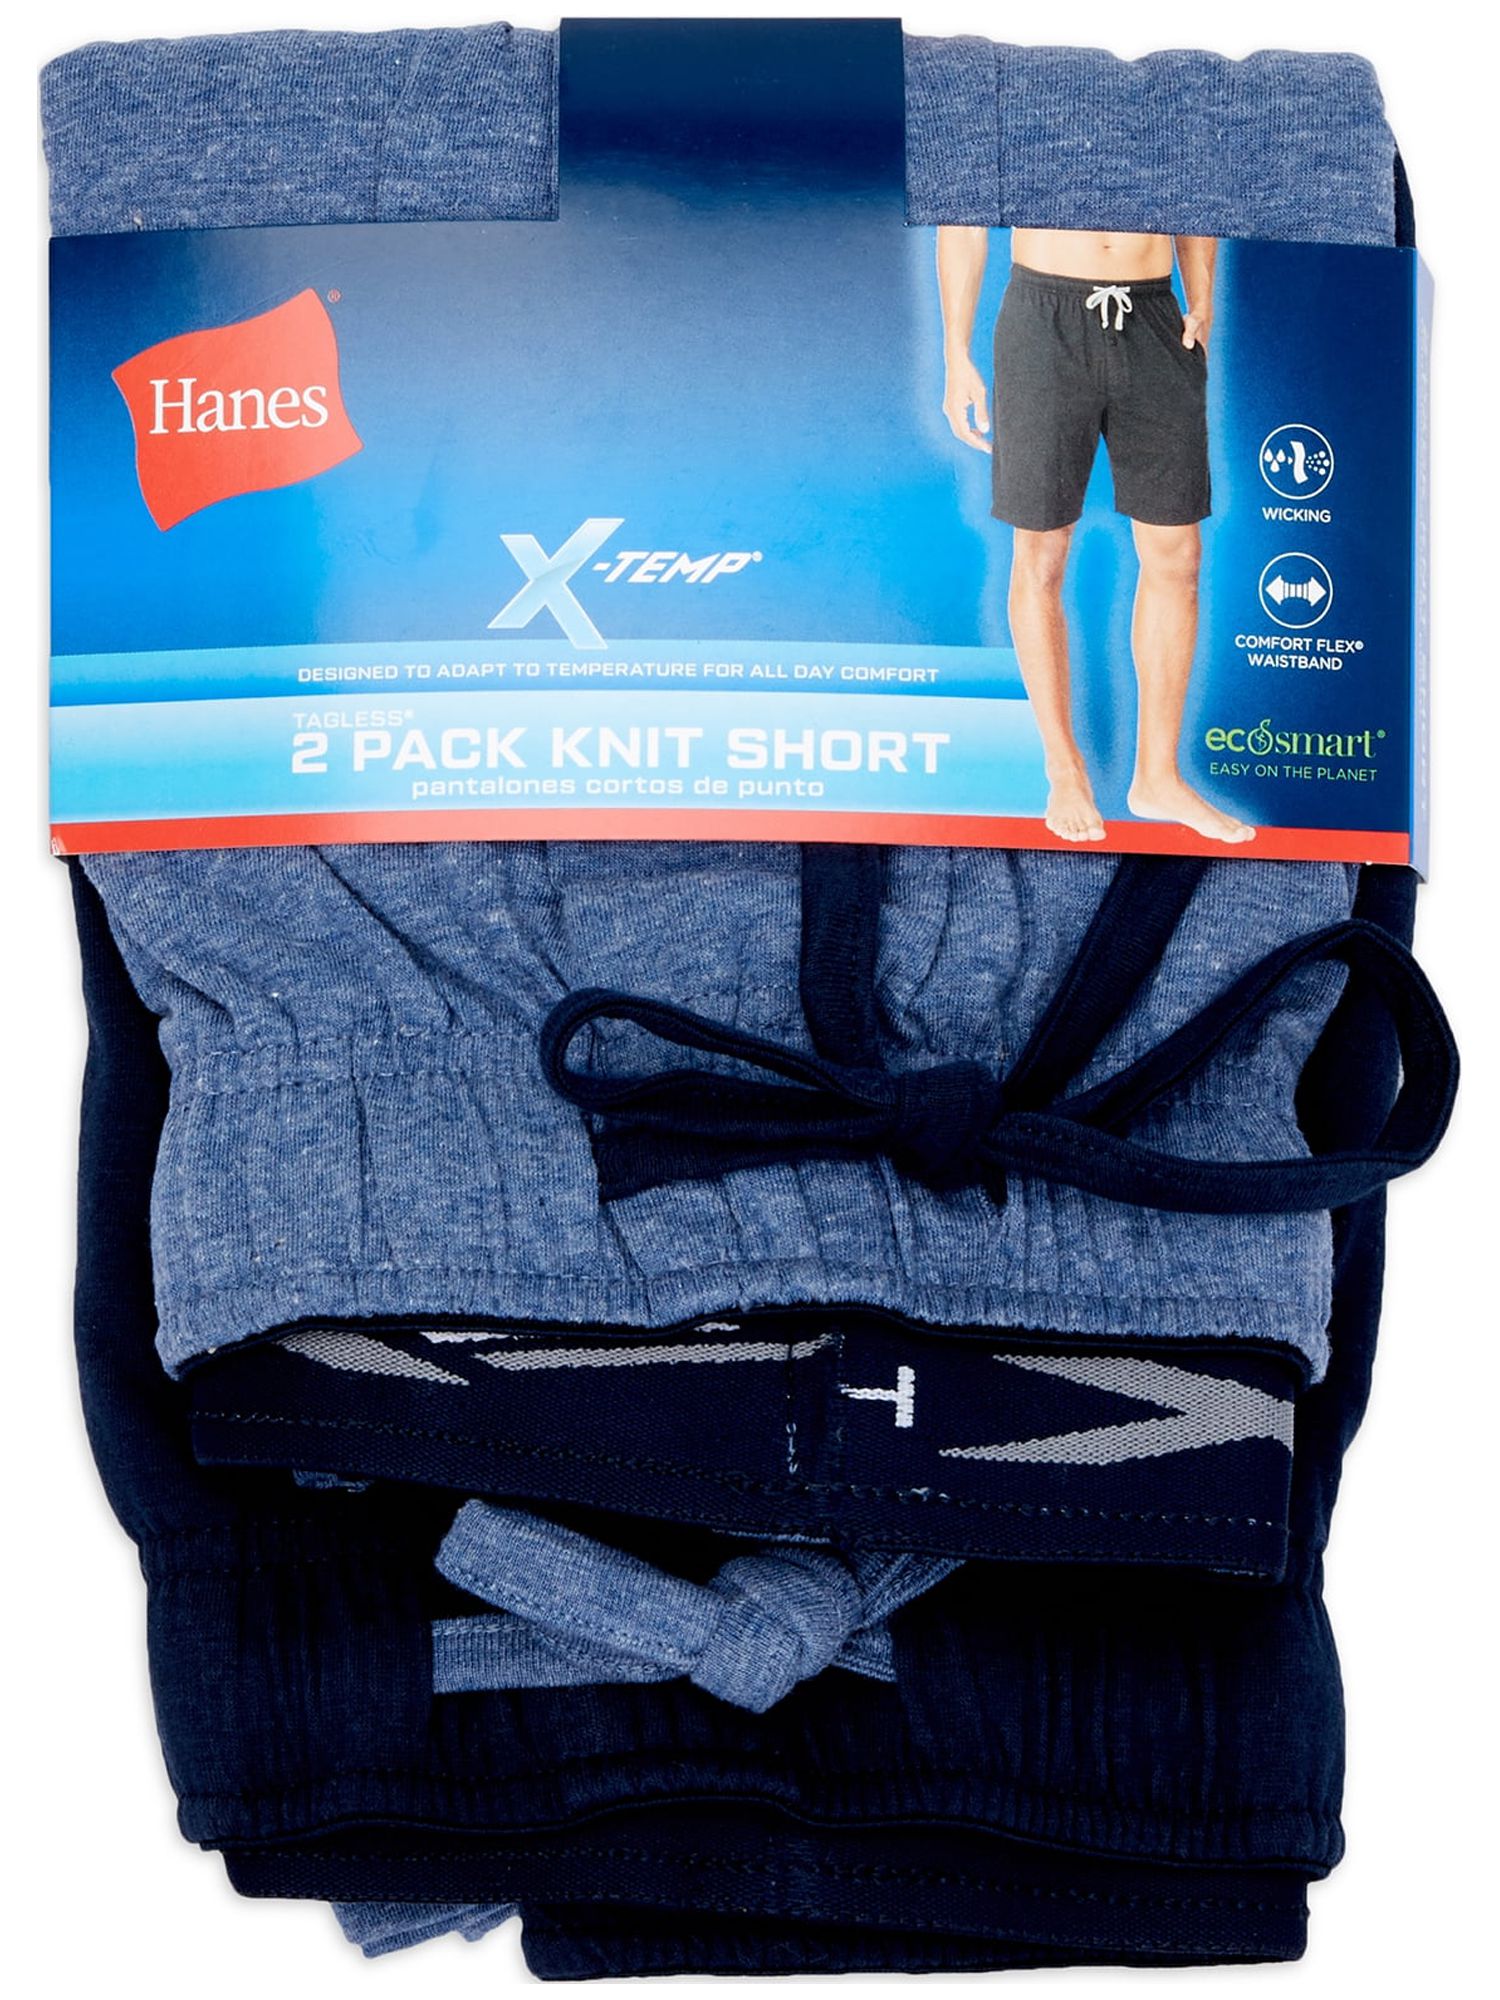 Hanes Men's and Big Men's Xtemp Knit Jam, 2-Pack - image 2 of 4